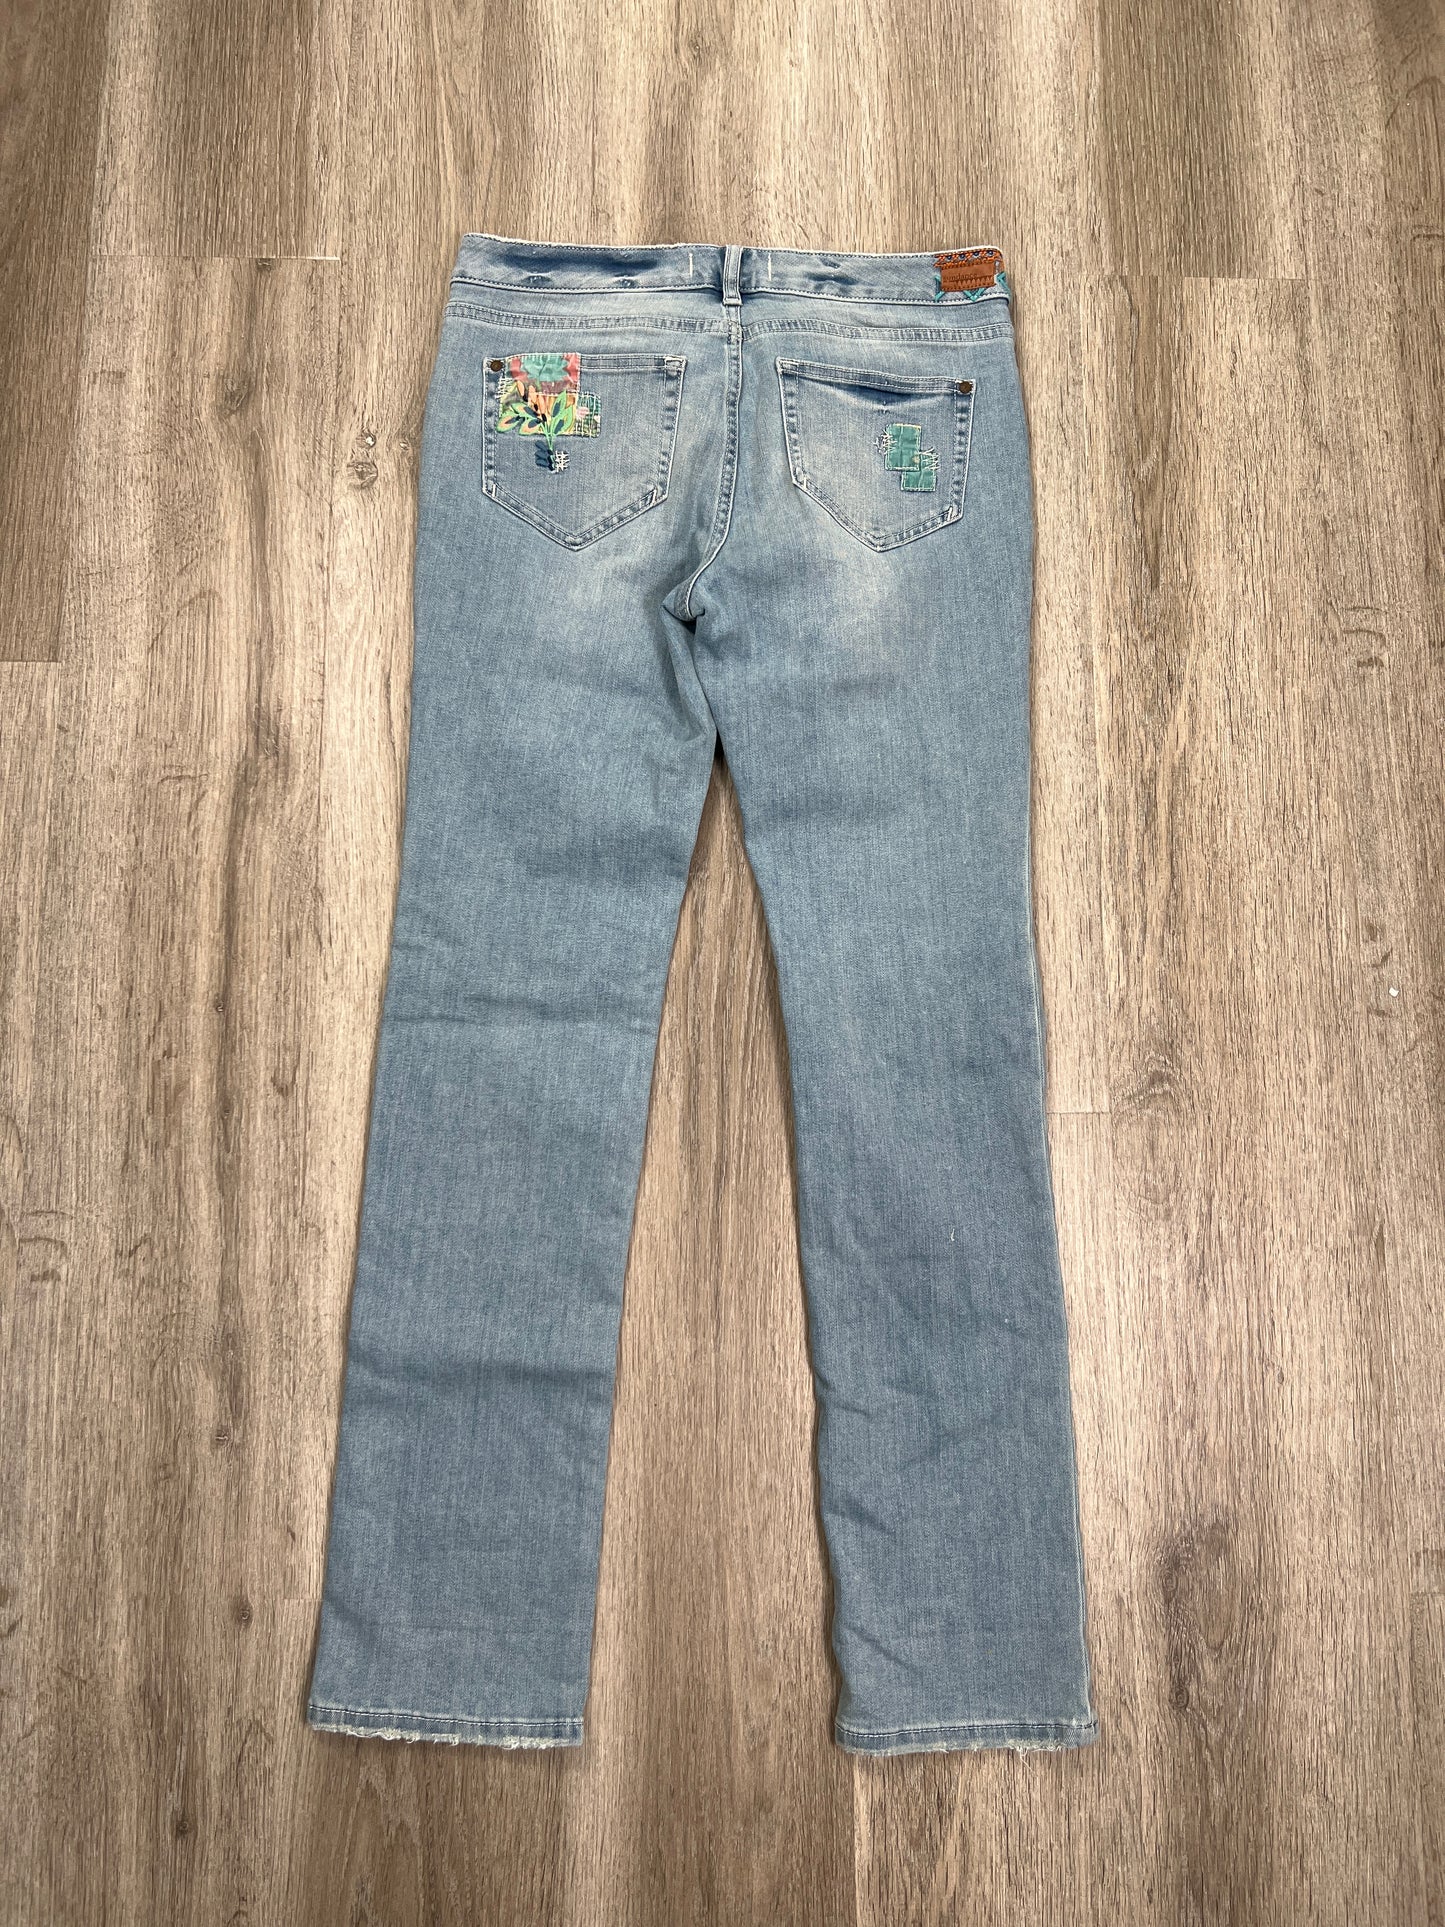 Jeans Straight By Sundance  Size: 8